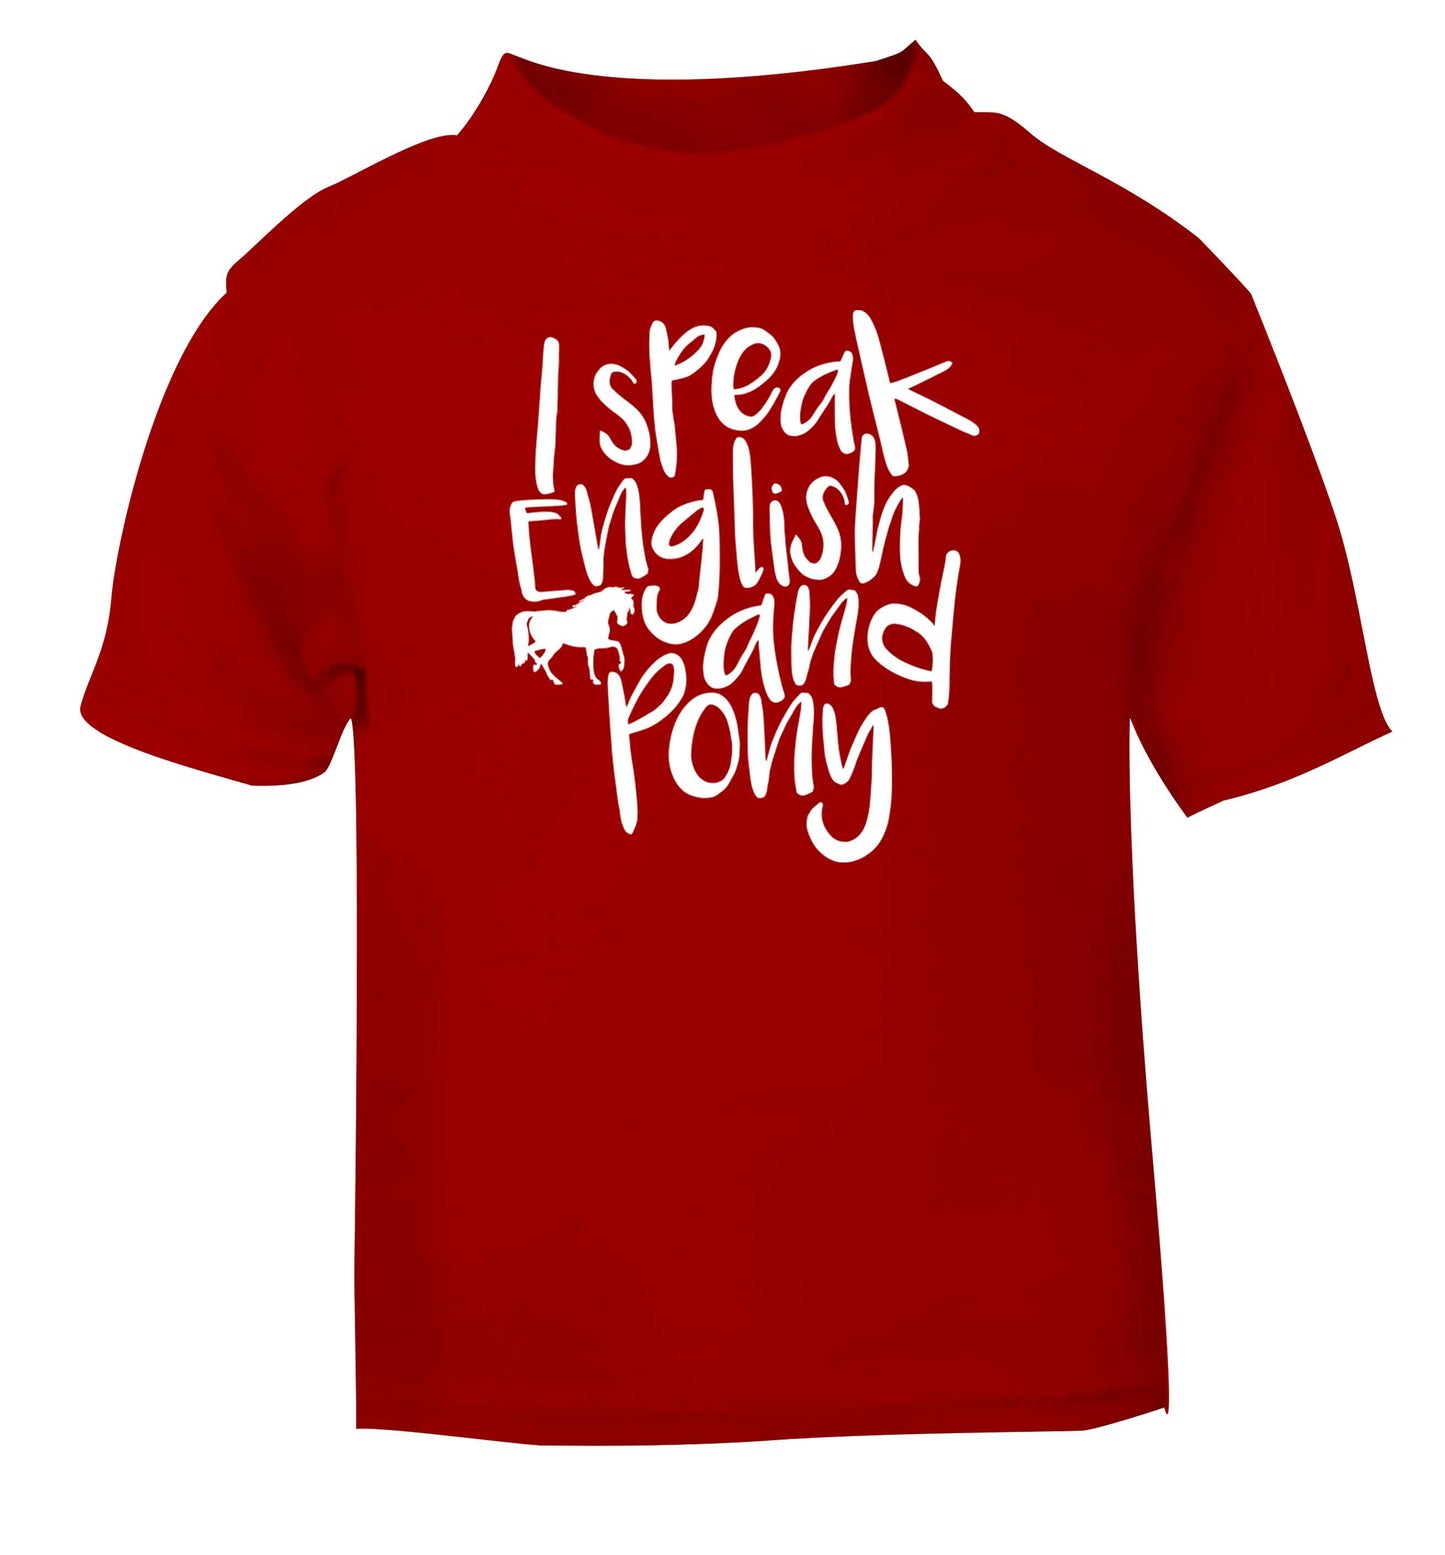 I speak English and pony red baby toddler Tshirt 2 Years